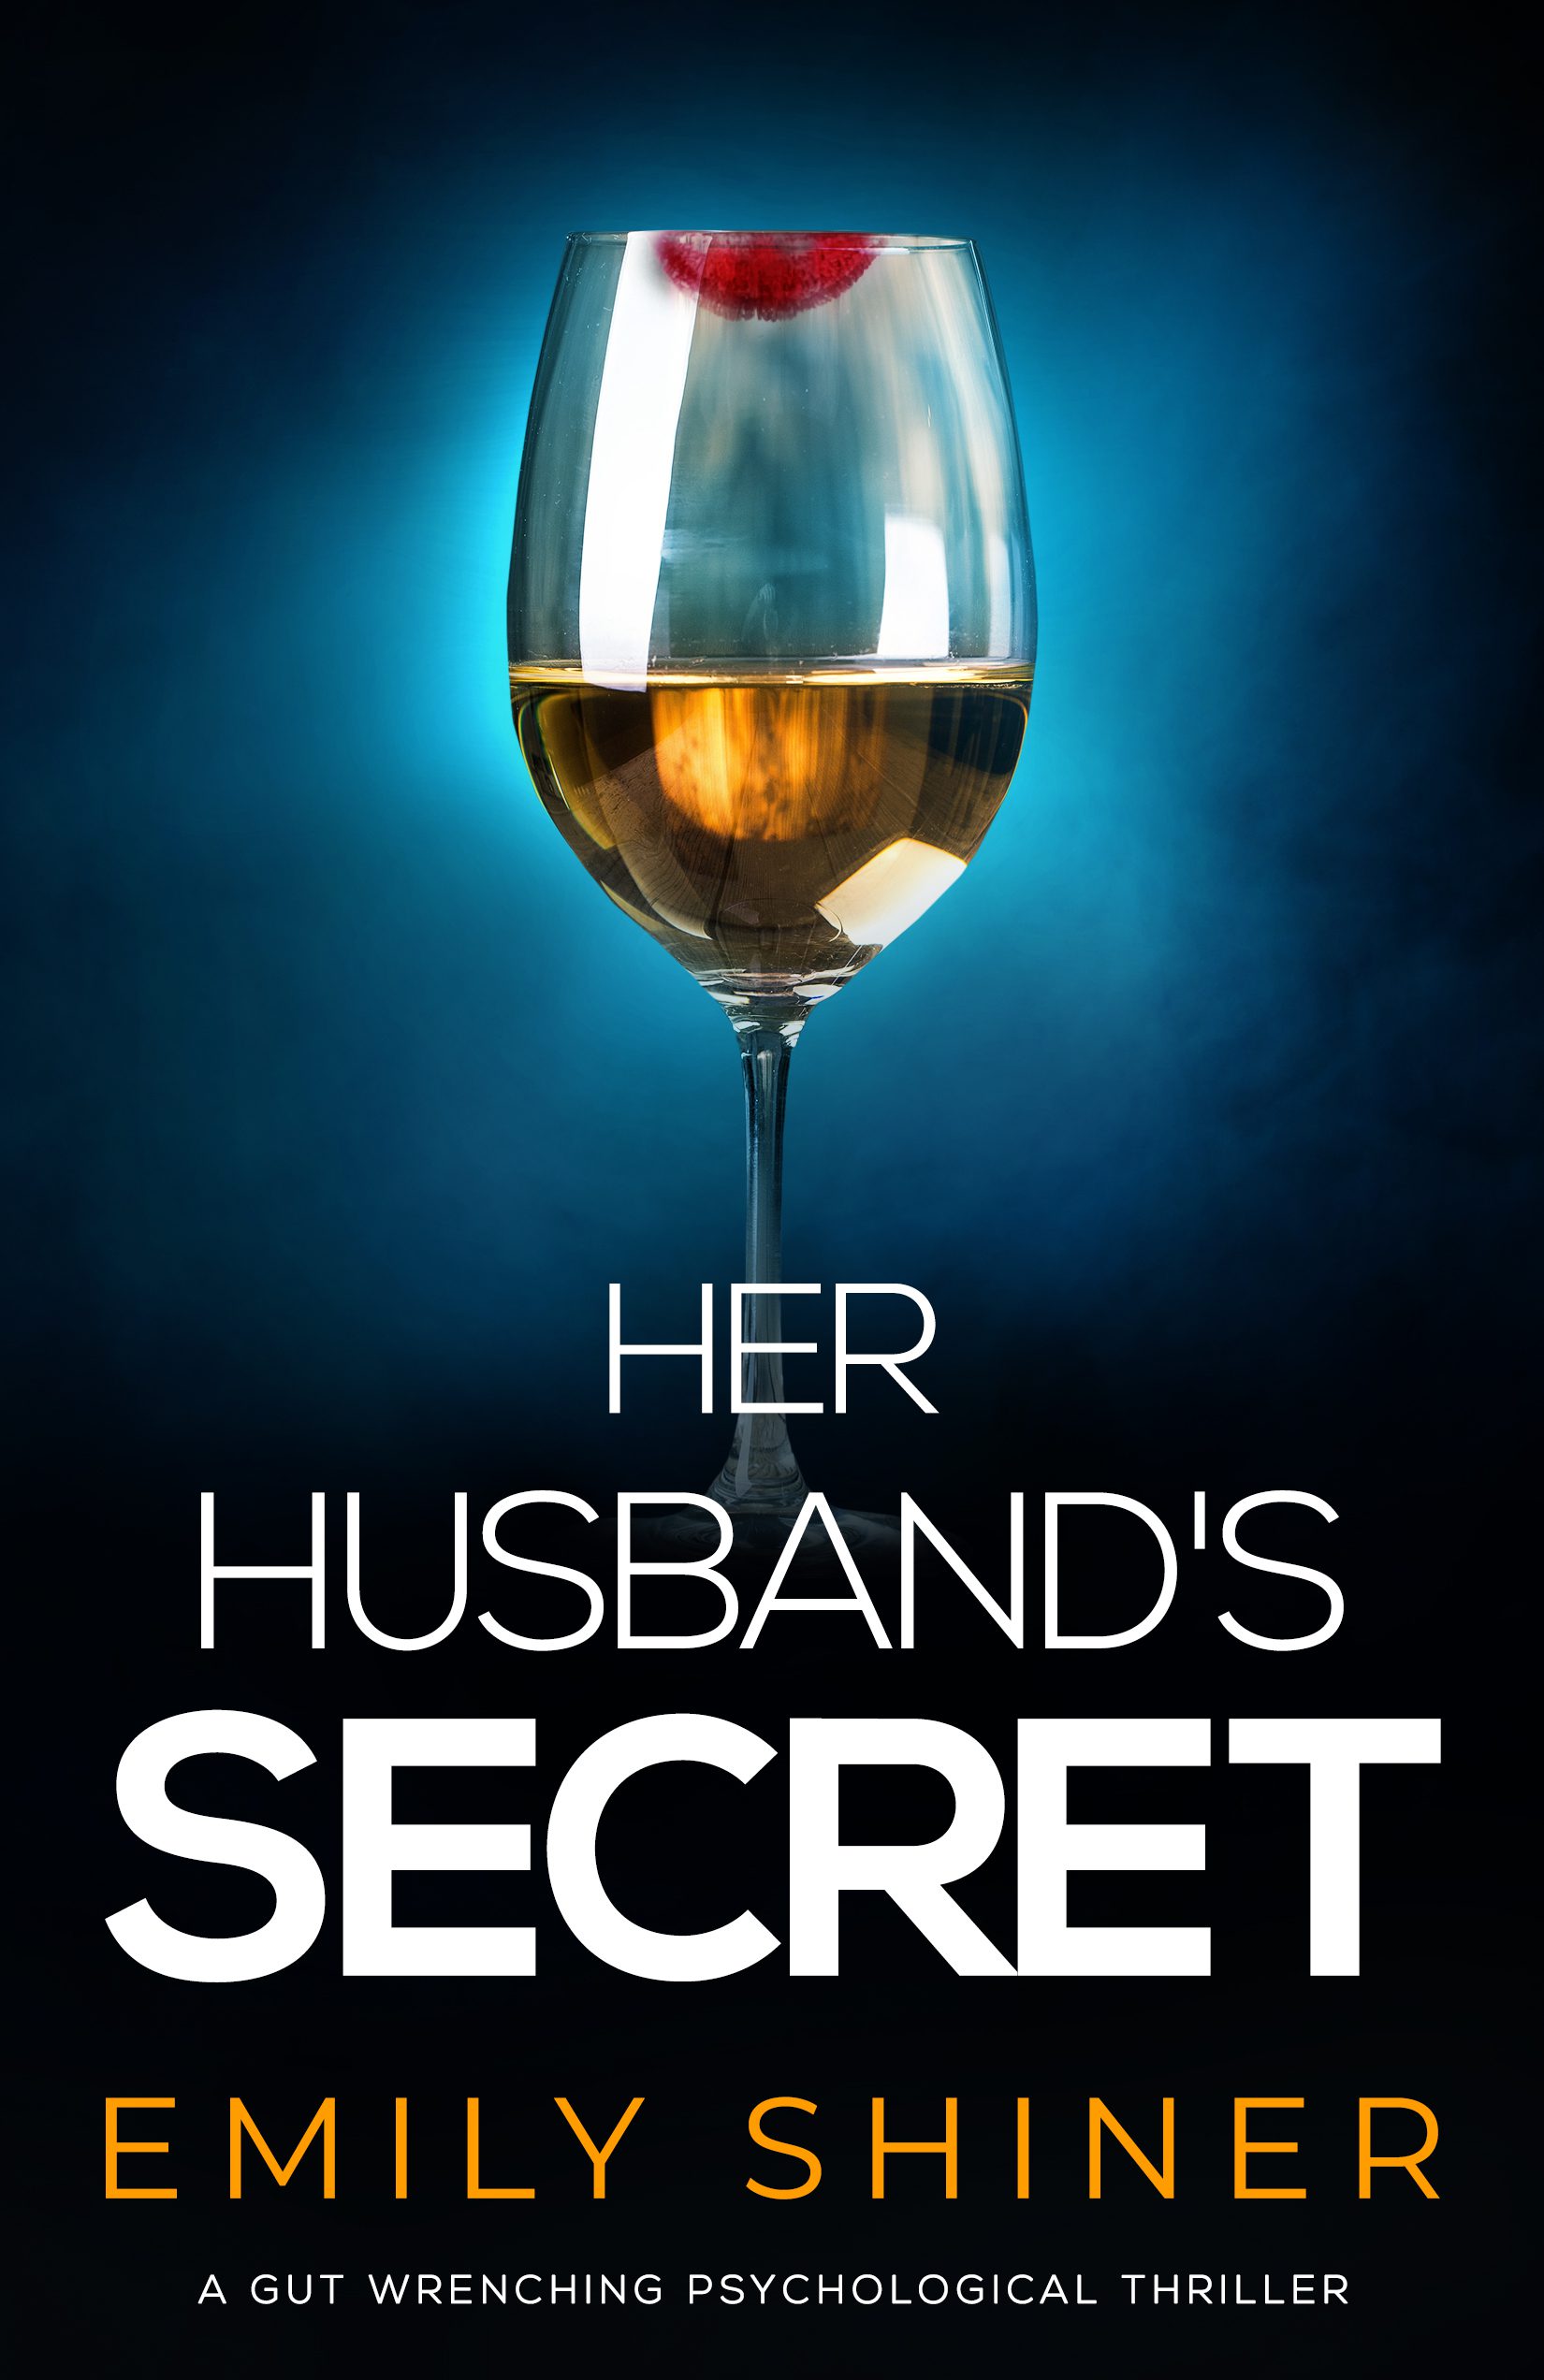 Her Husband's Secret book cover